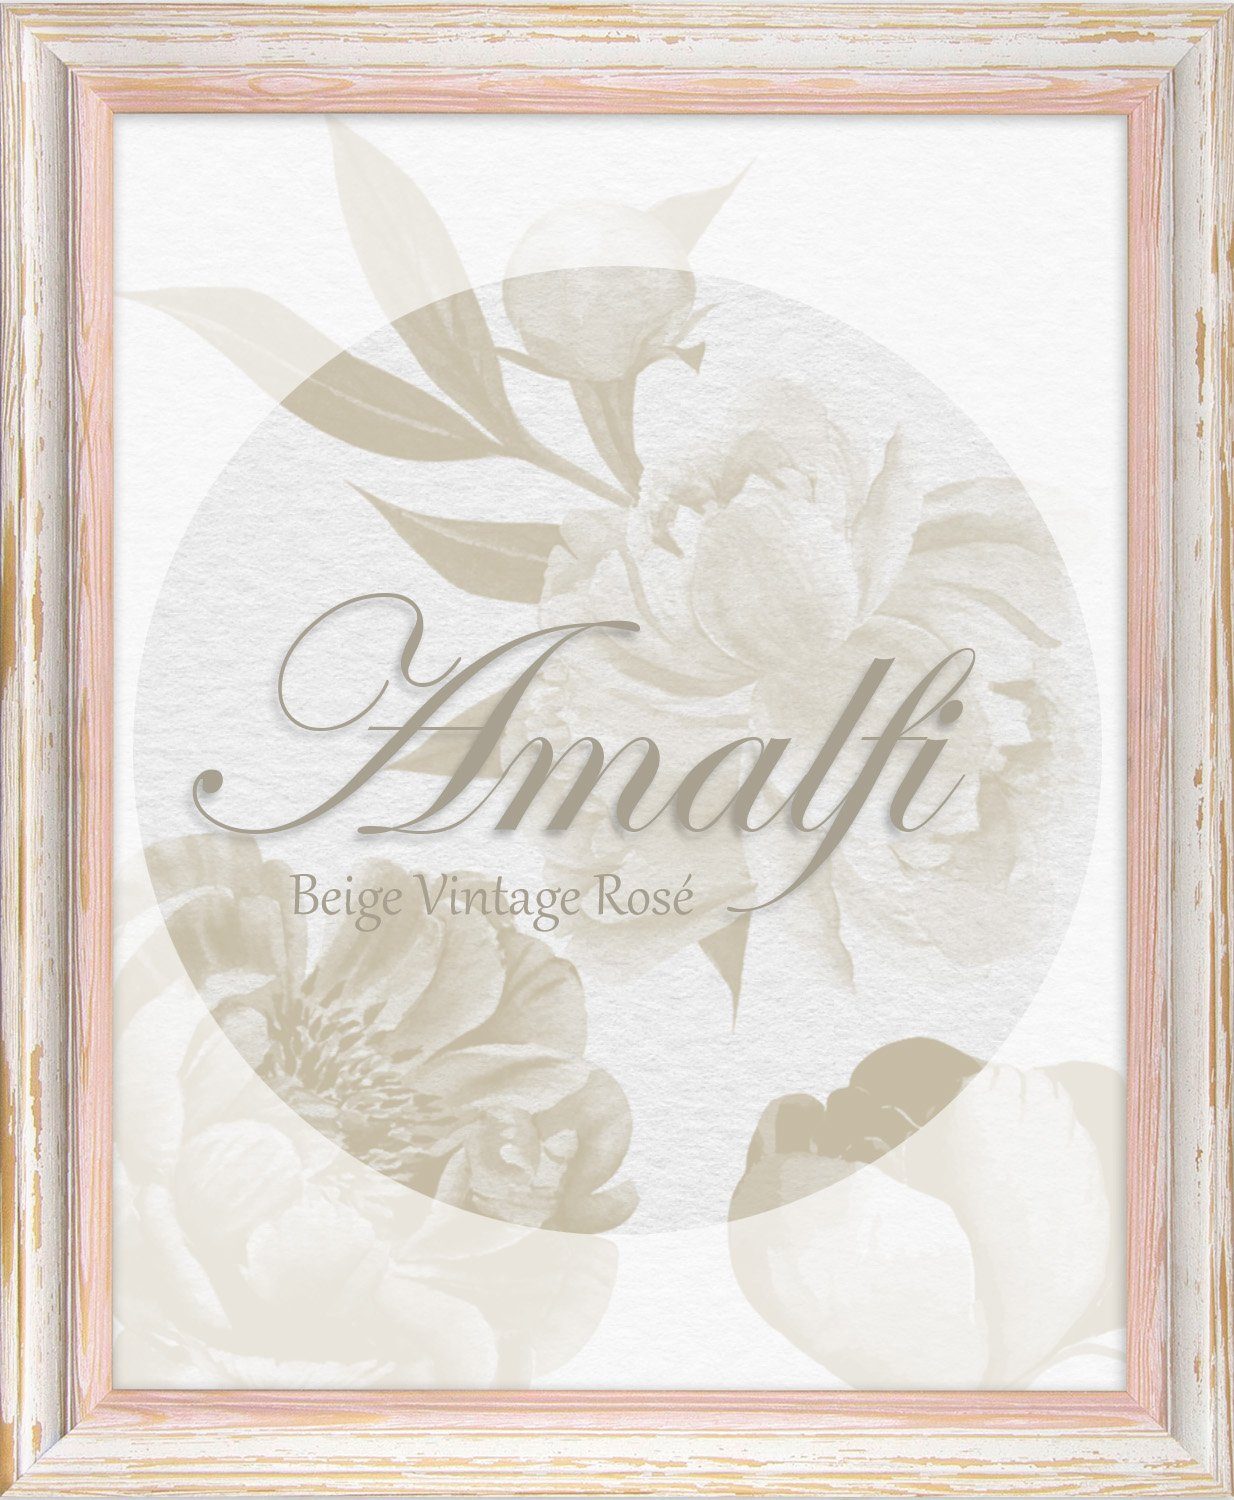 BIRAPA Einzelrahmen Bilderrahmen Amalfi, (1 Stück), 20x20 cm, Rosé Weiß Vintage, Holz | Einzelrahmen